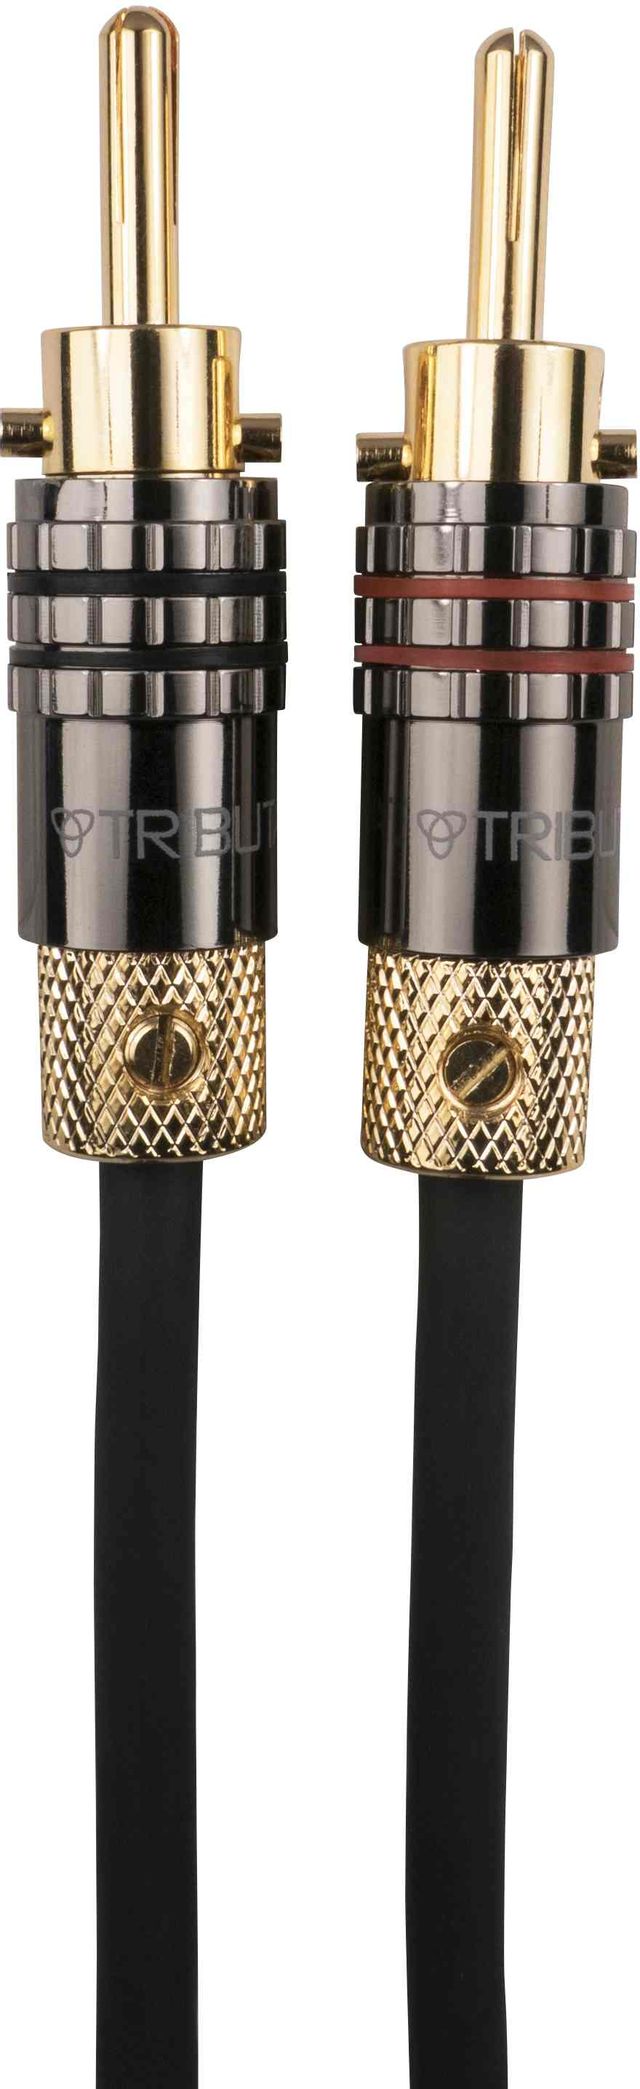 Tributaries® Series 8 4 Ft. Banana Plugs Speaker Cable